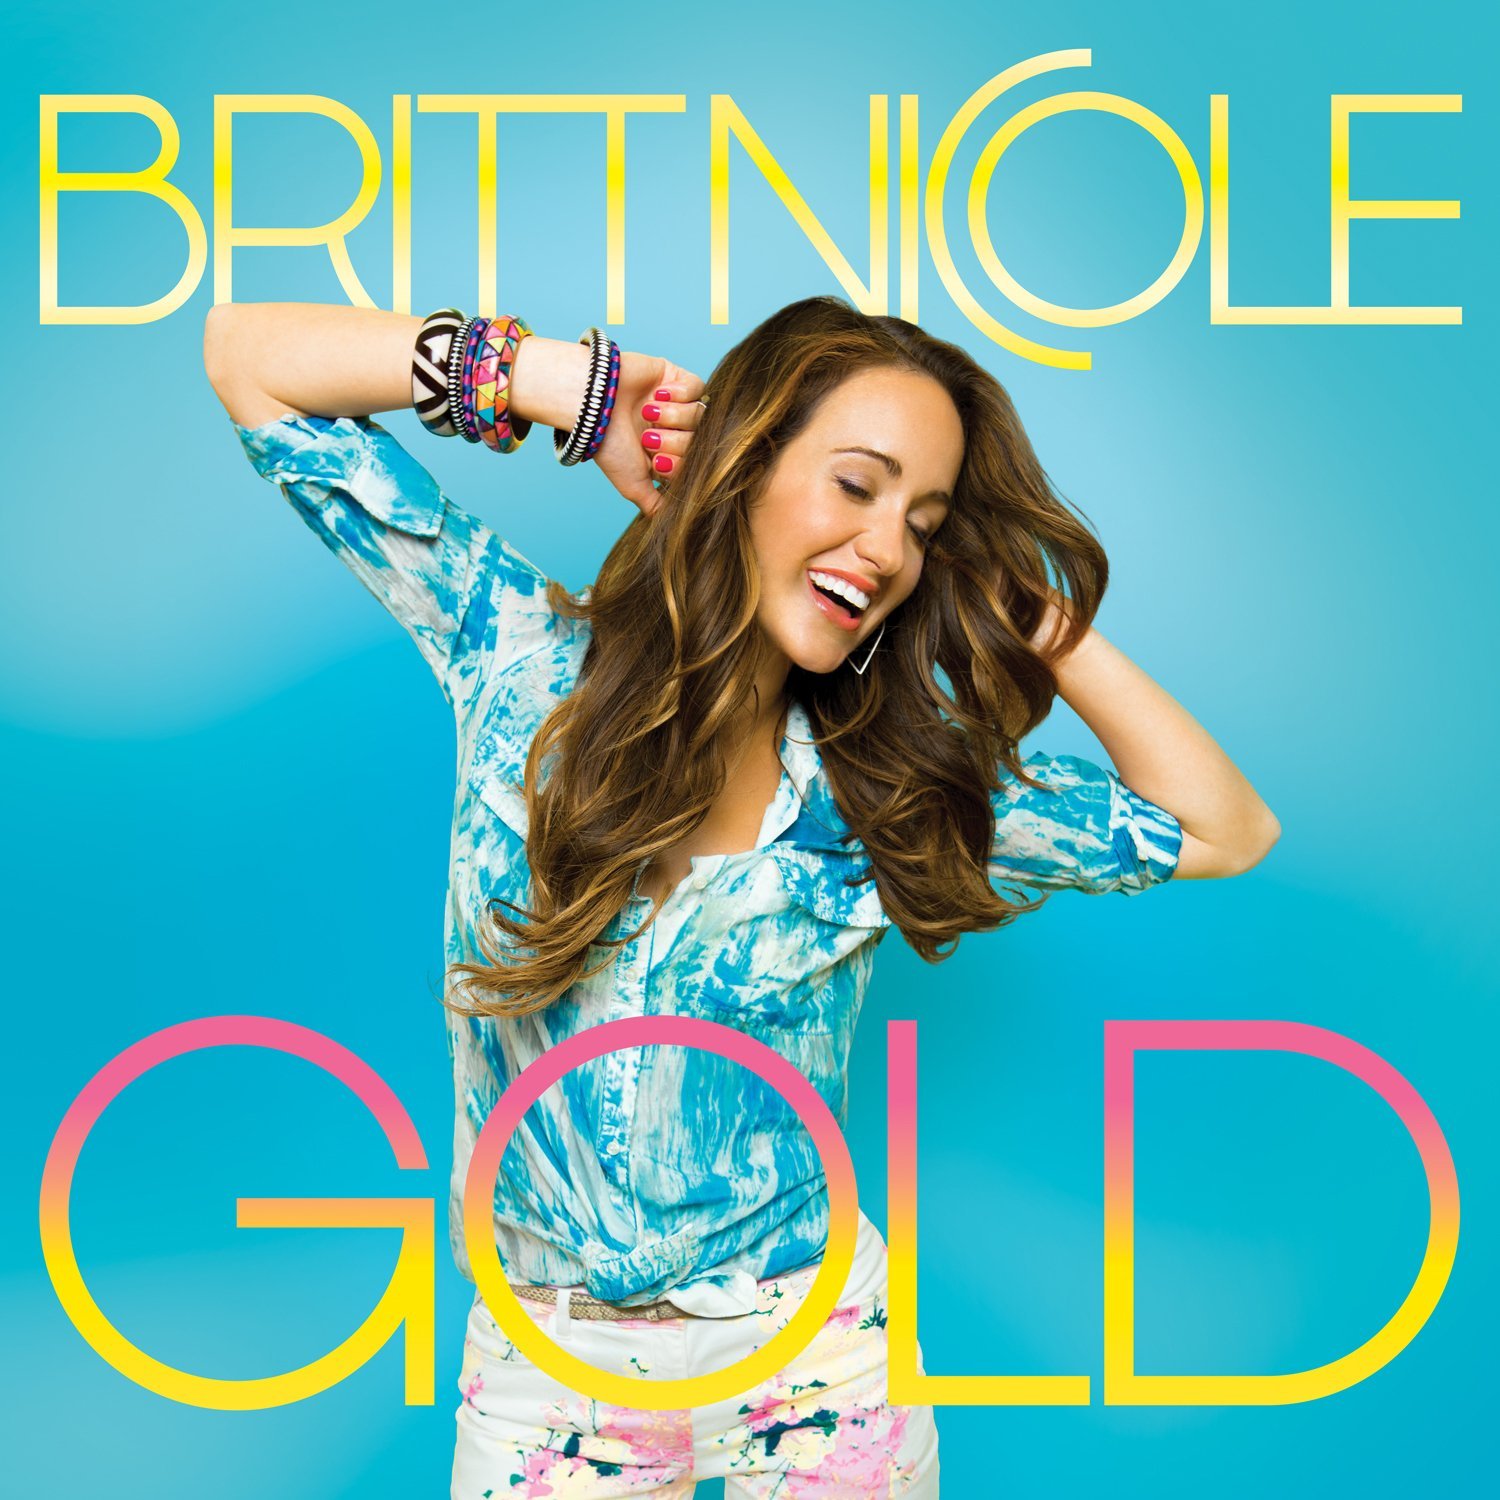 Britt Nicole - Gold (2012)